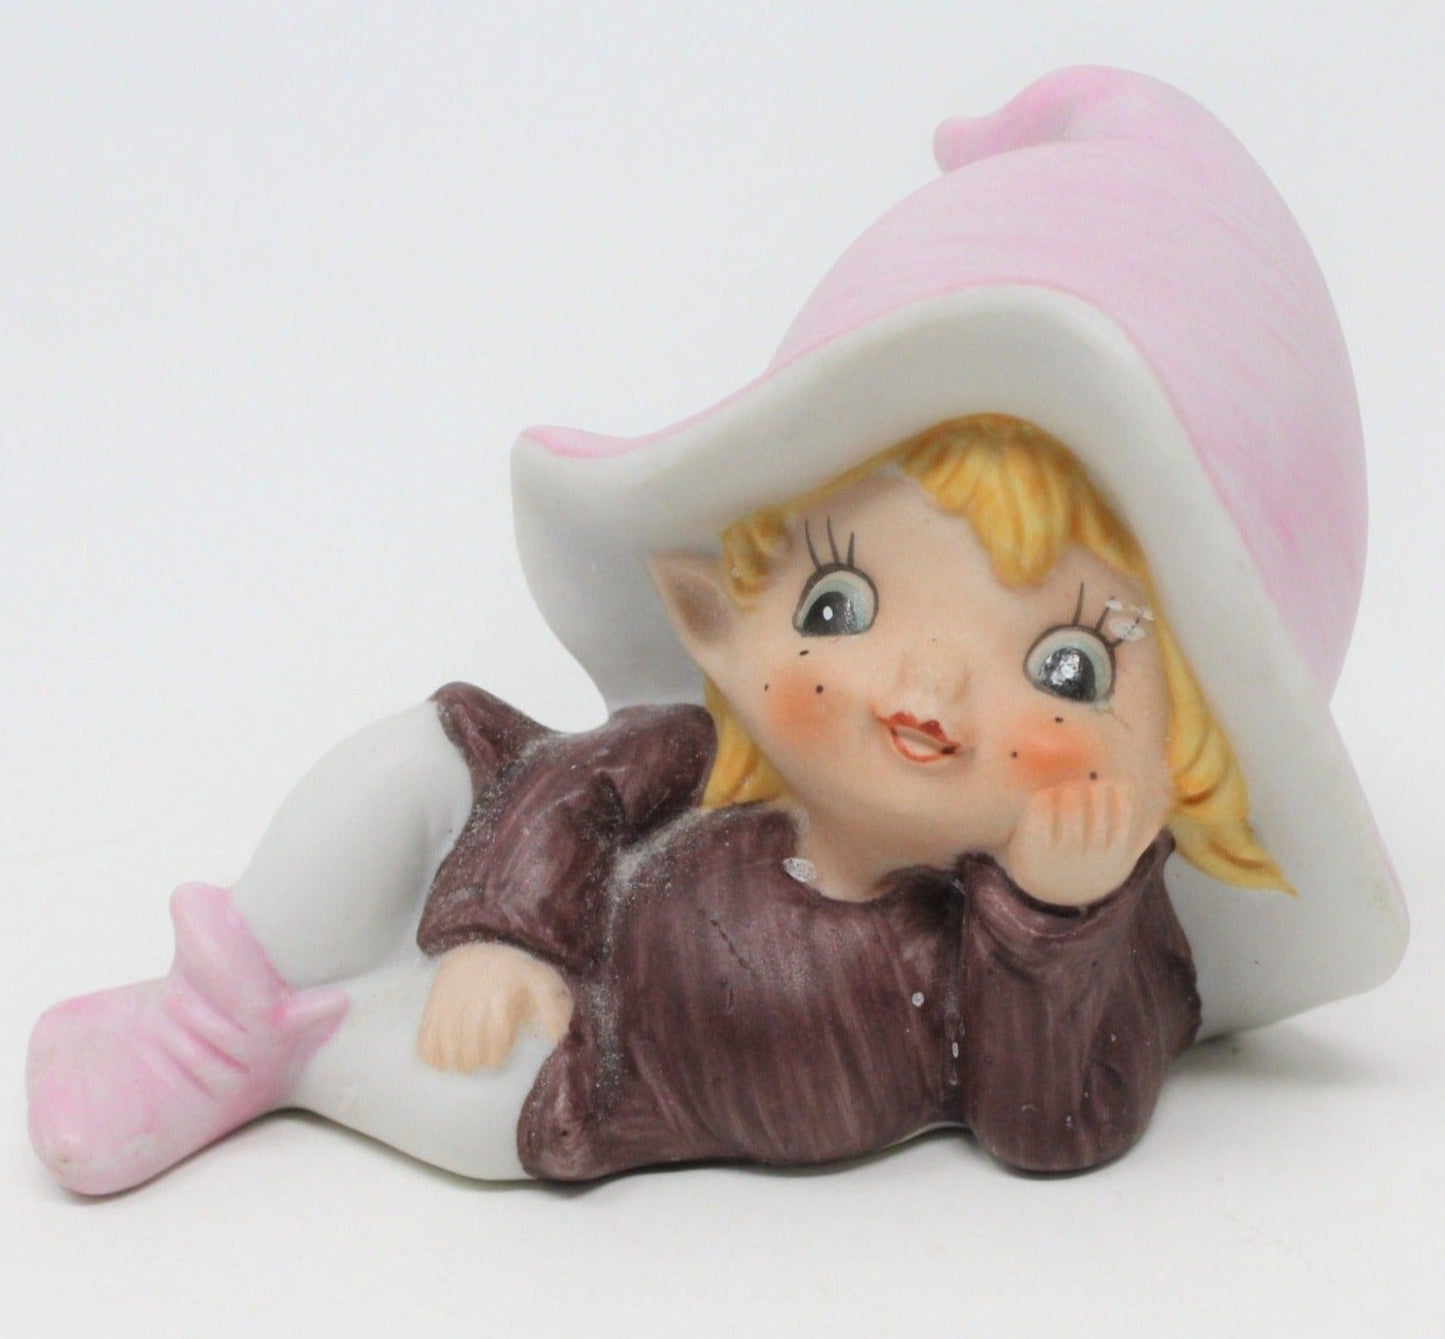 Figurine, HomCo, Pixie / Elf, #5213, Pink and Purple, Vintage